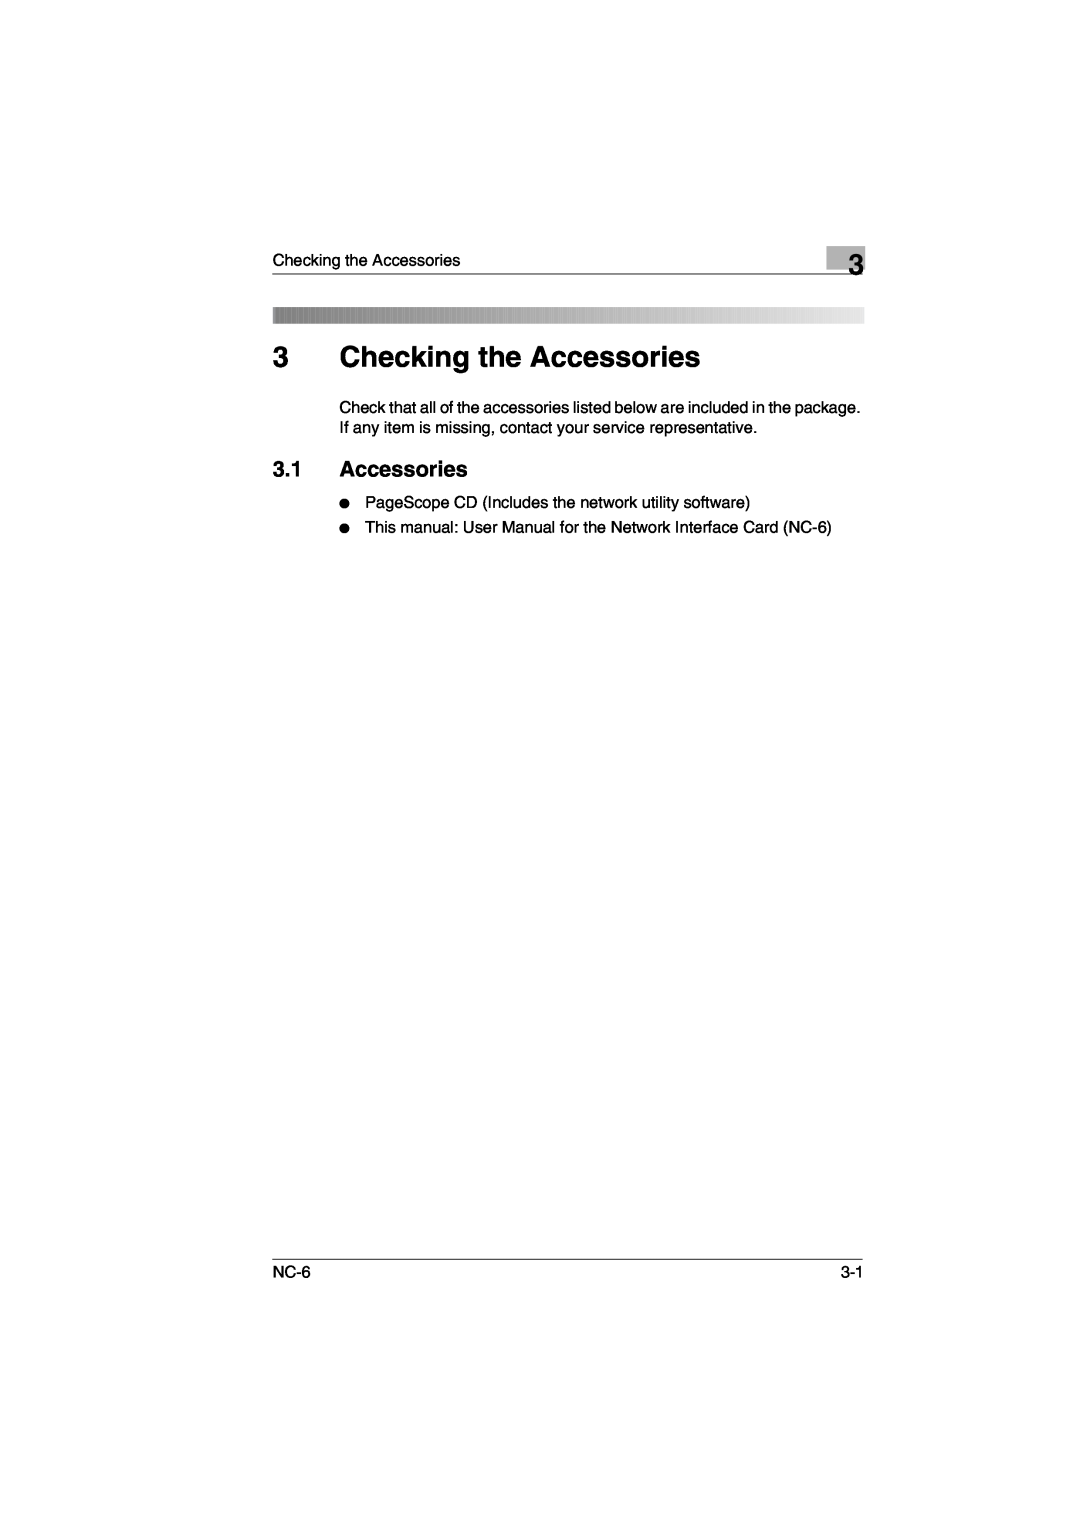 Konica Minolta NC-6 user manual Checking the Accessories 